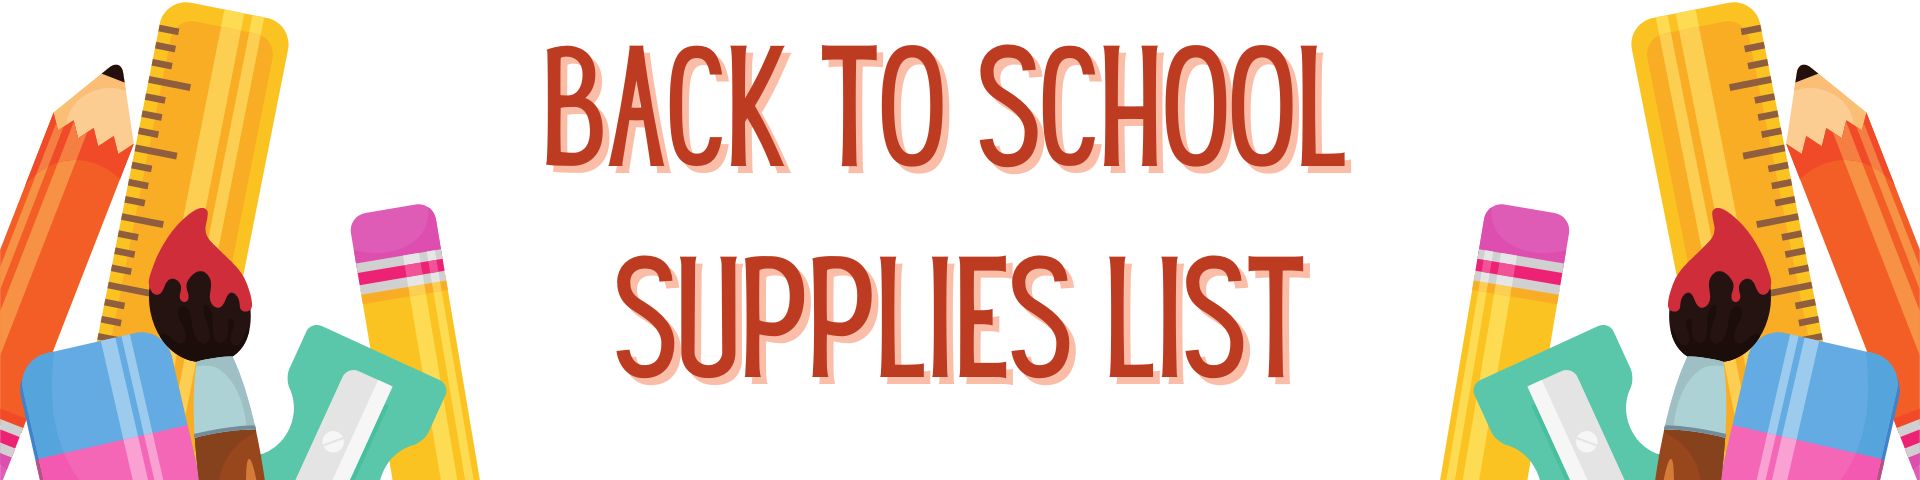 Back to School Supplies List